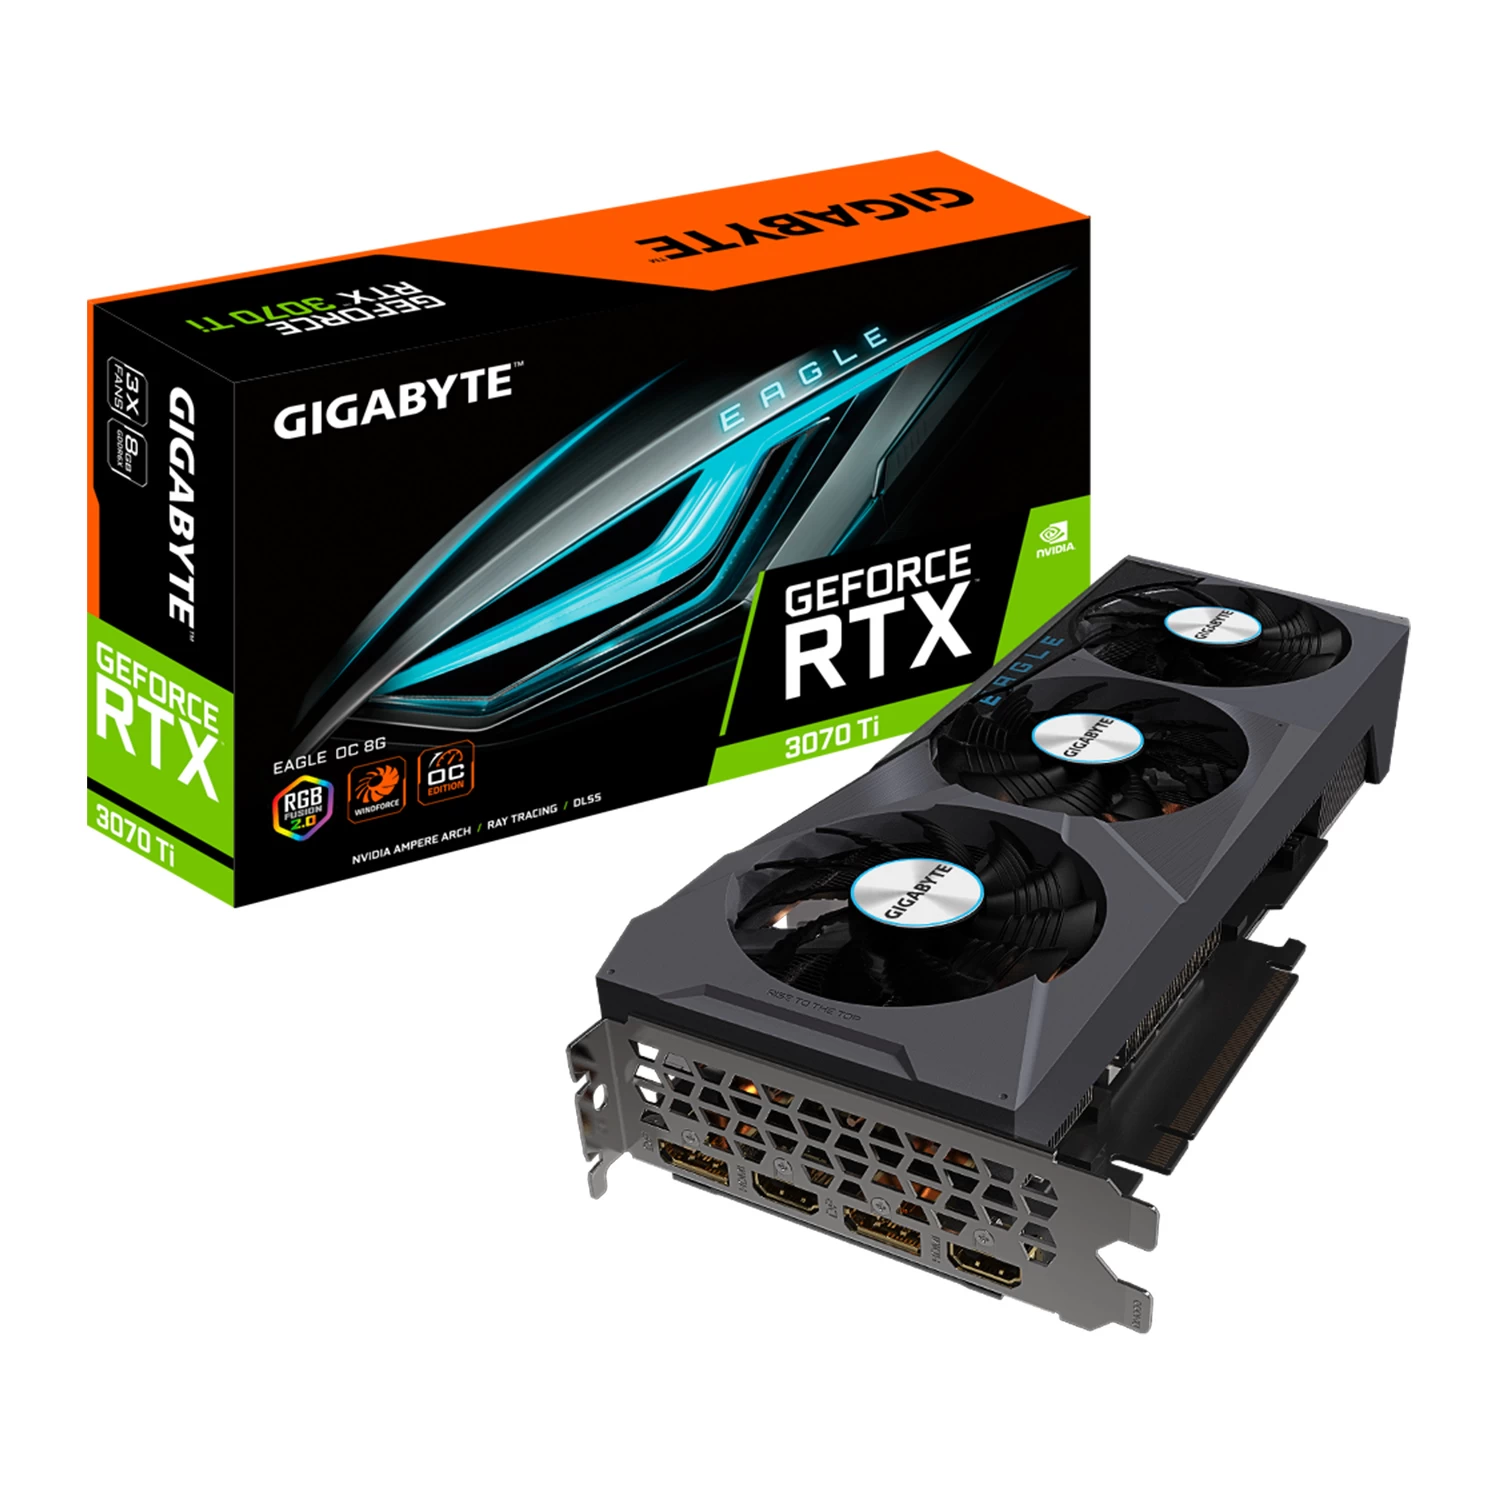 Gigabyte GeForce RTX 3070 Ti EAGLE OC 8G Package